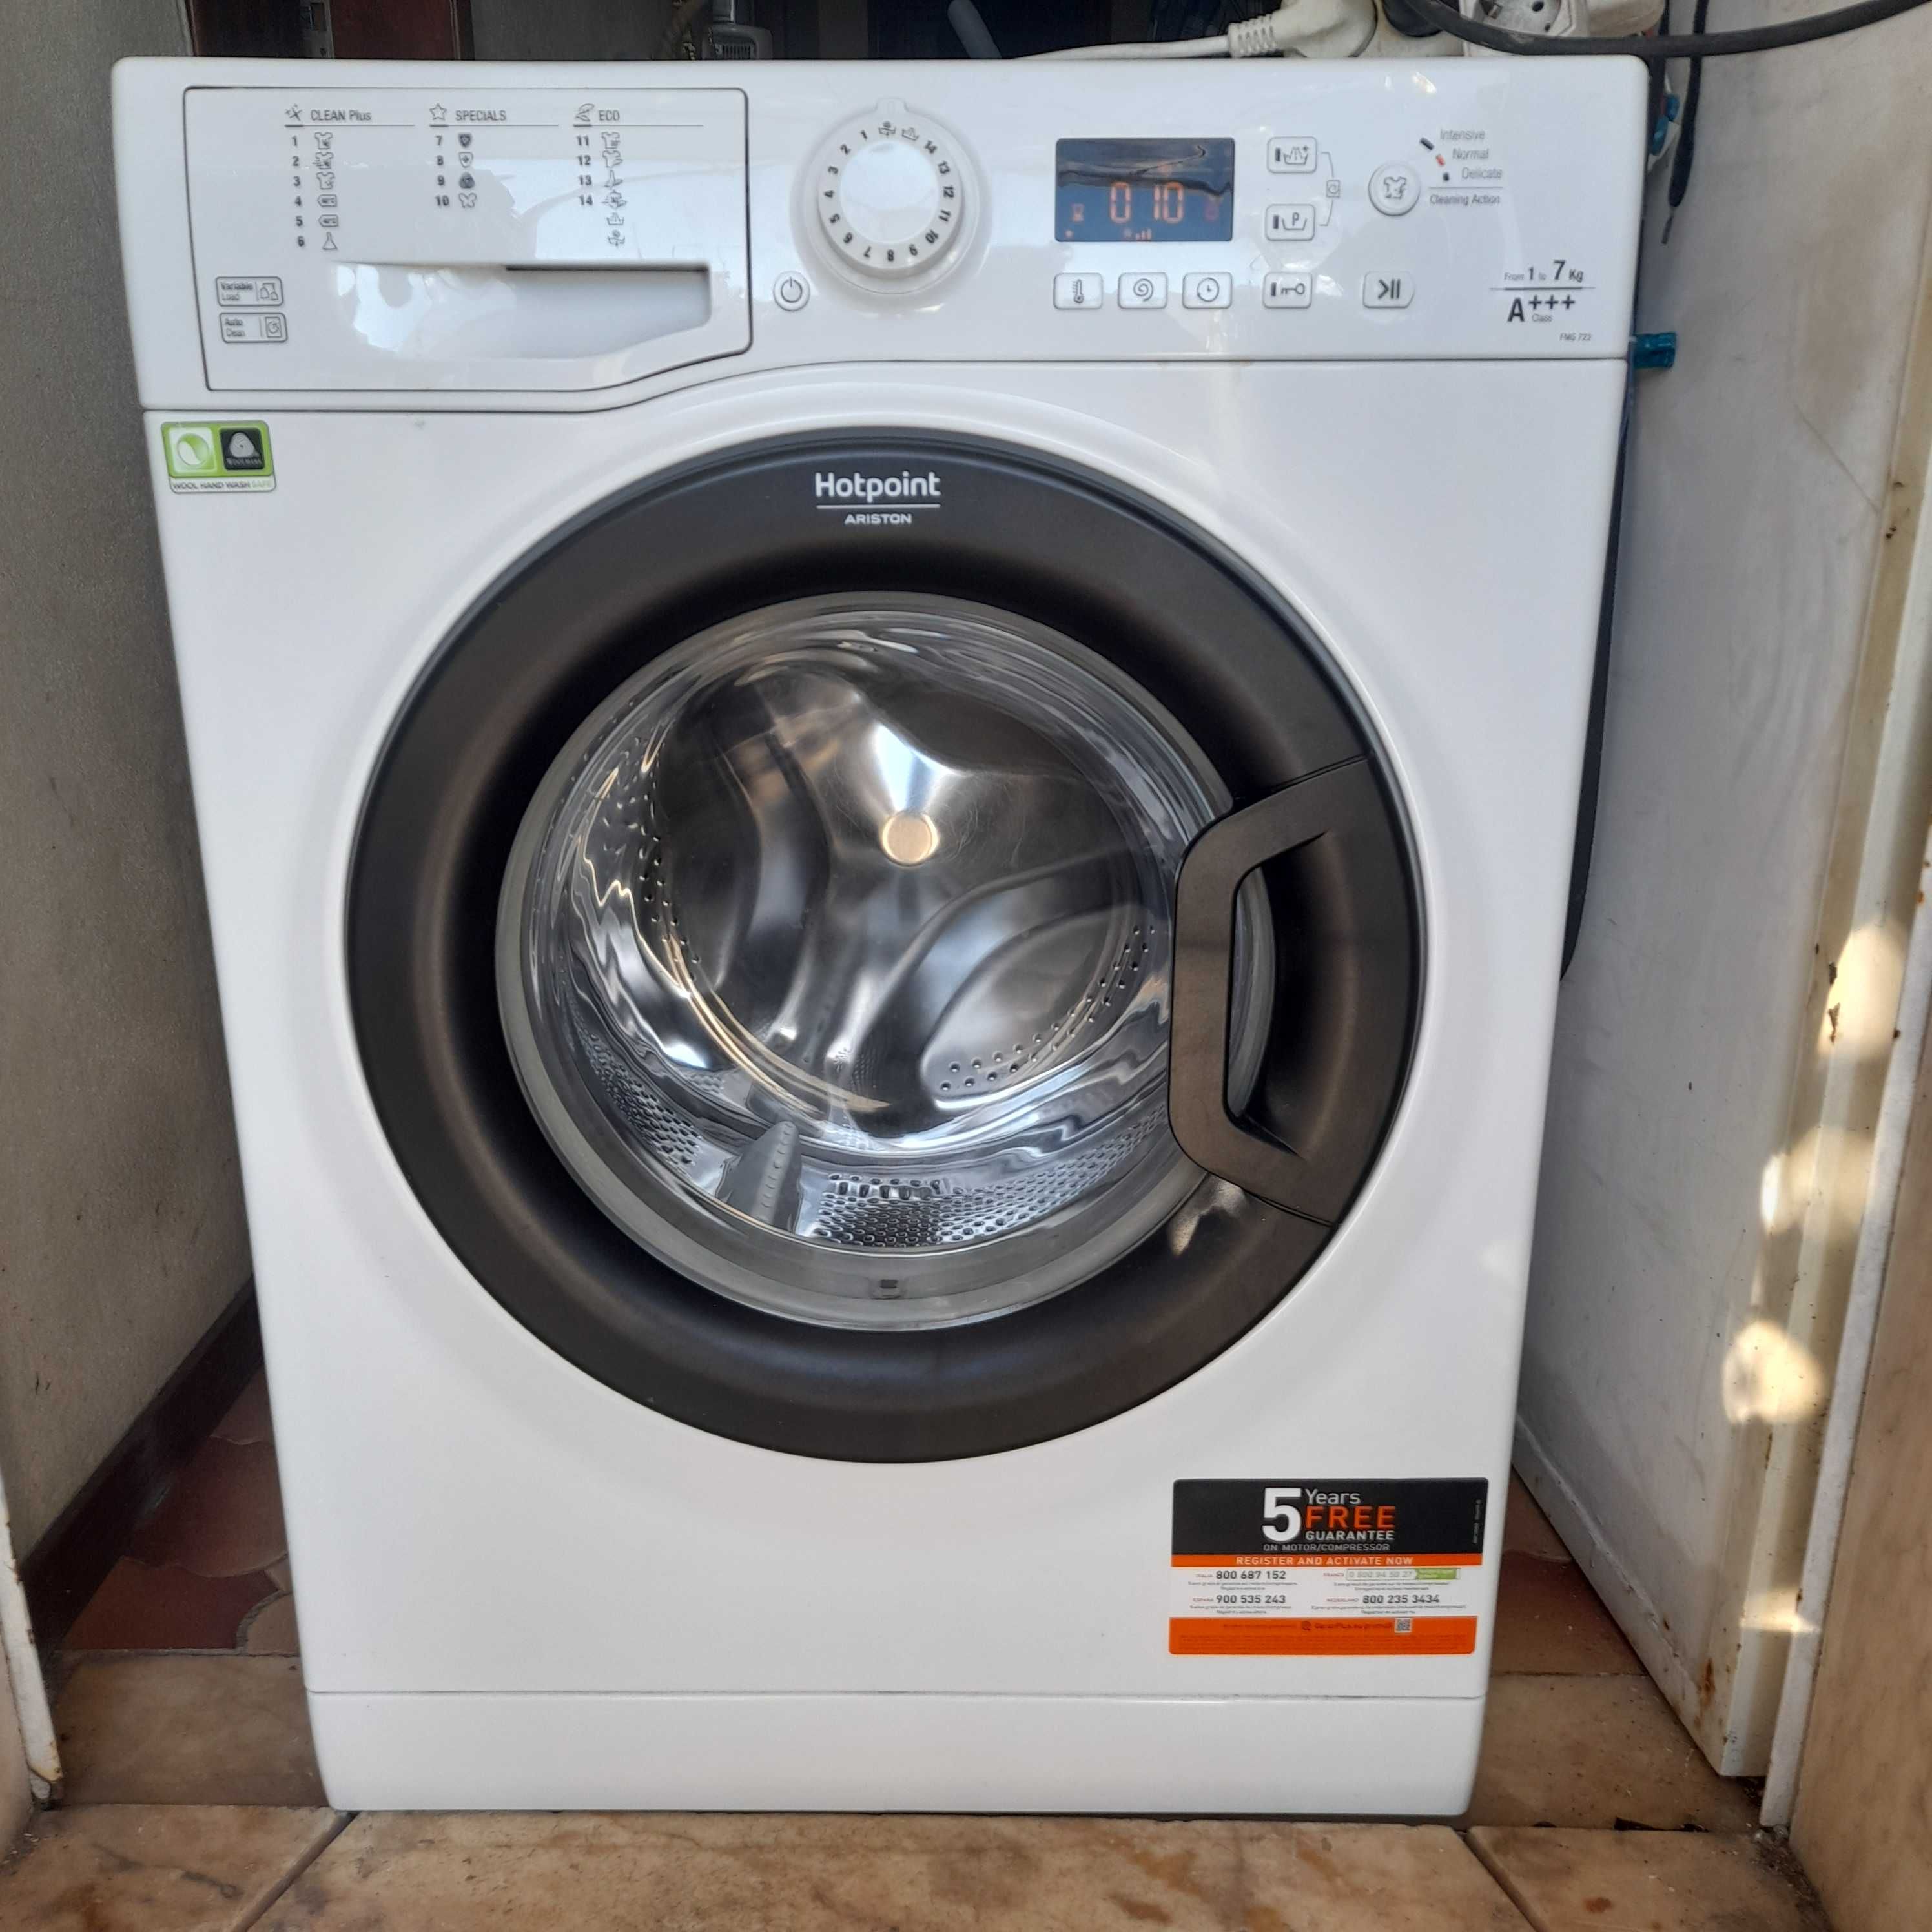 maquina lavar Ariston Hoitpoit 7 quilos  14000 rpm